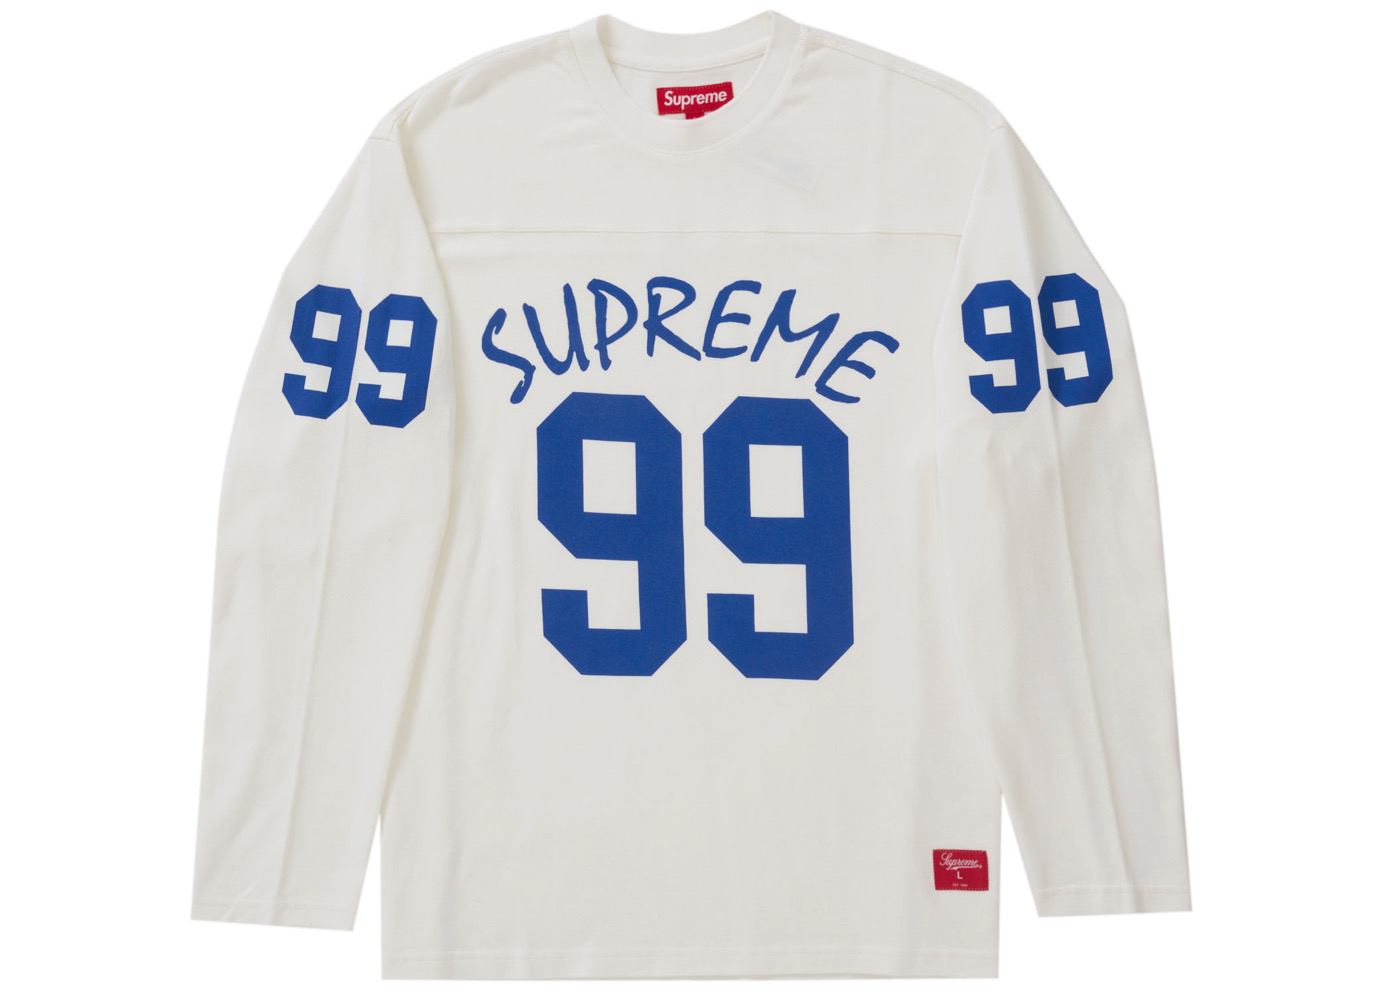 99LSFootballTop【新品】Supreme シュプリーム 99 L/S Football Top